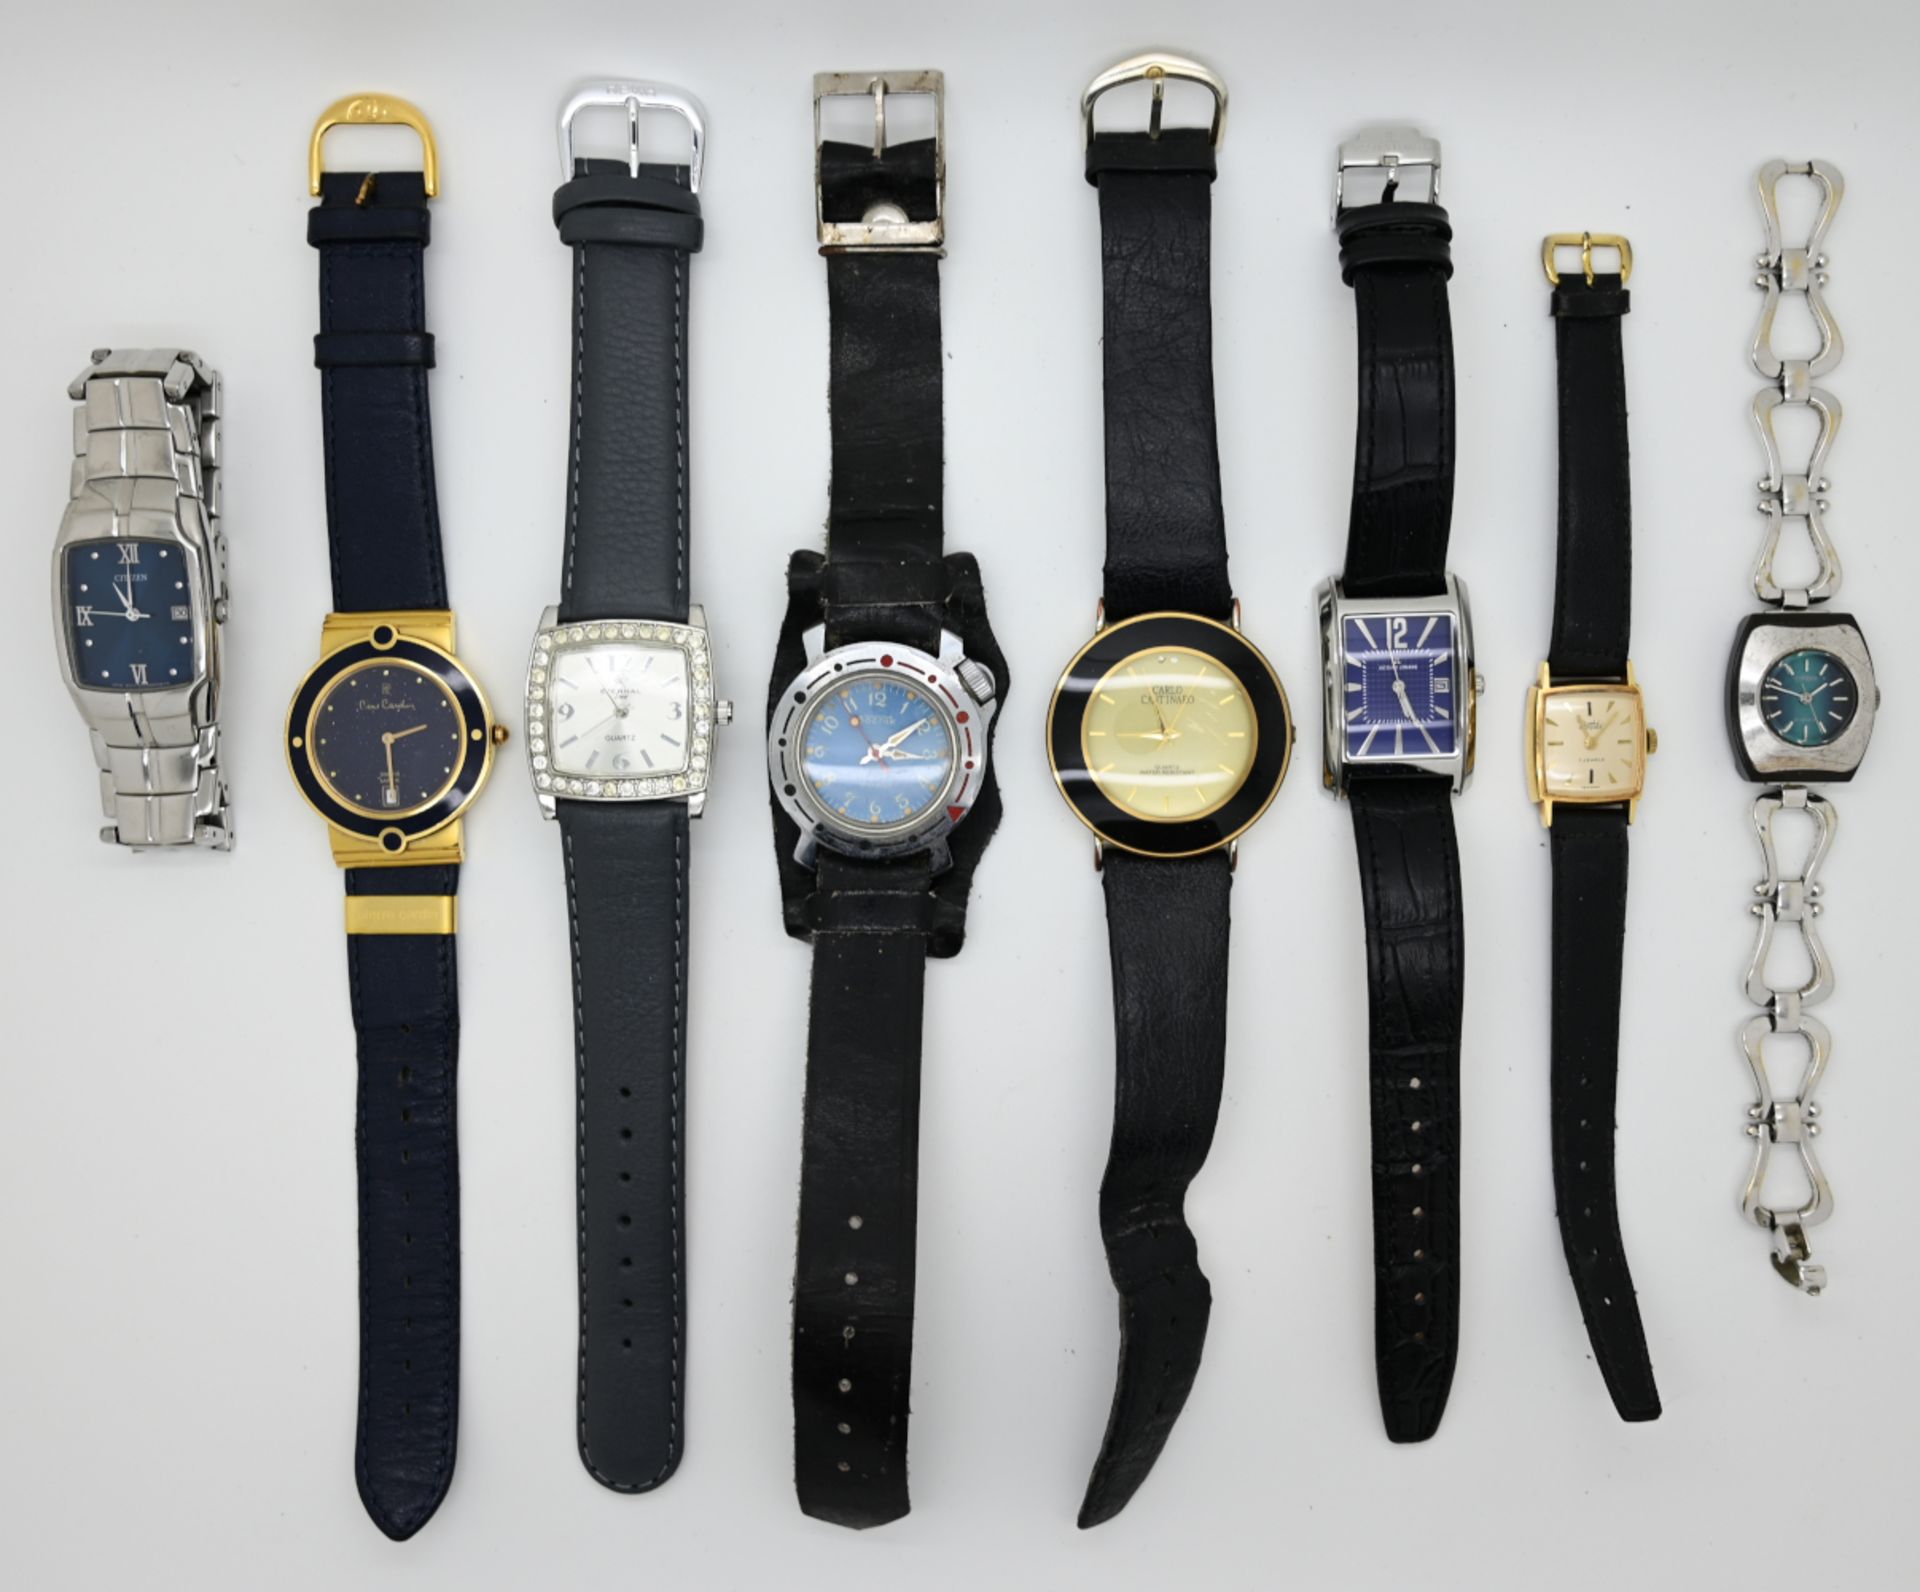 1 Armbanduhr MATHIS MONTABON, Edelstahl, Automatik, mit Lederband, in Originalschatulle, mit Zertifi